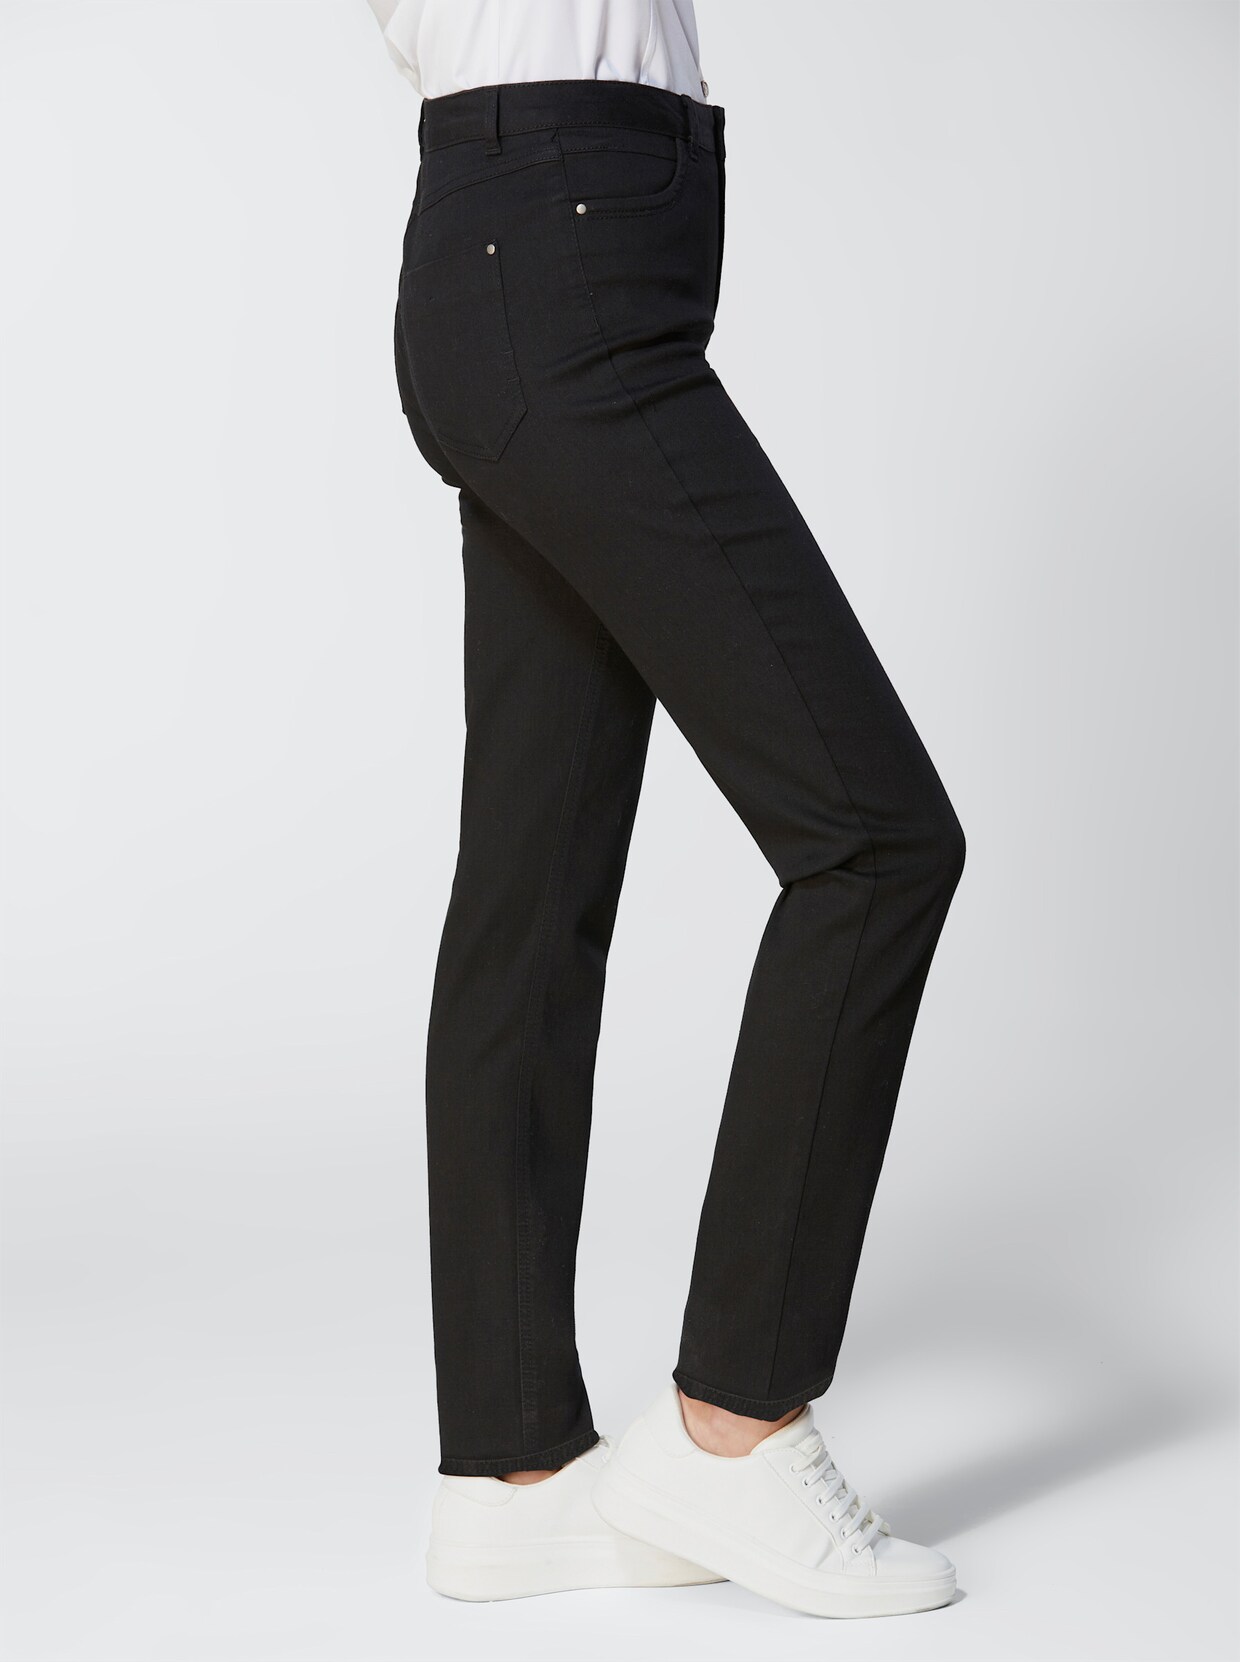 Creation L Premium Chique jeans - black denim